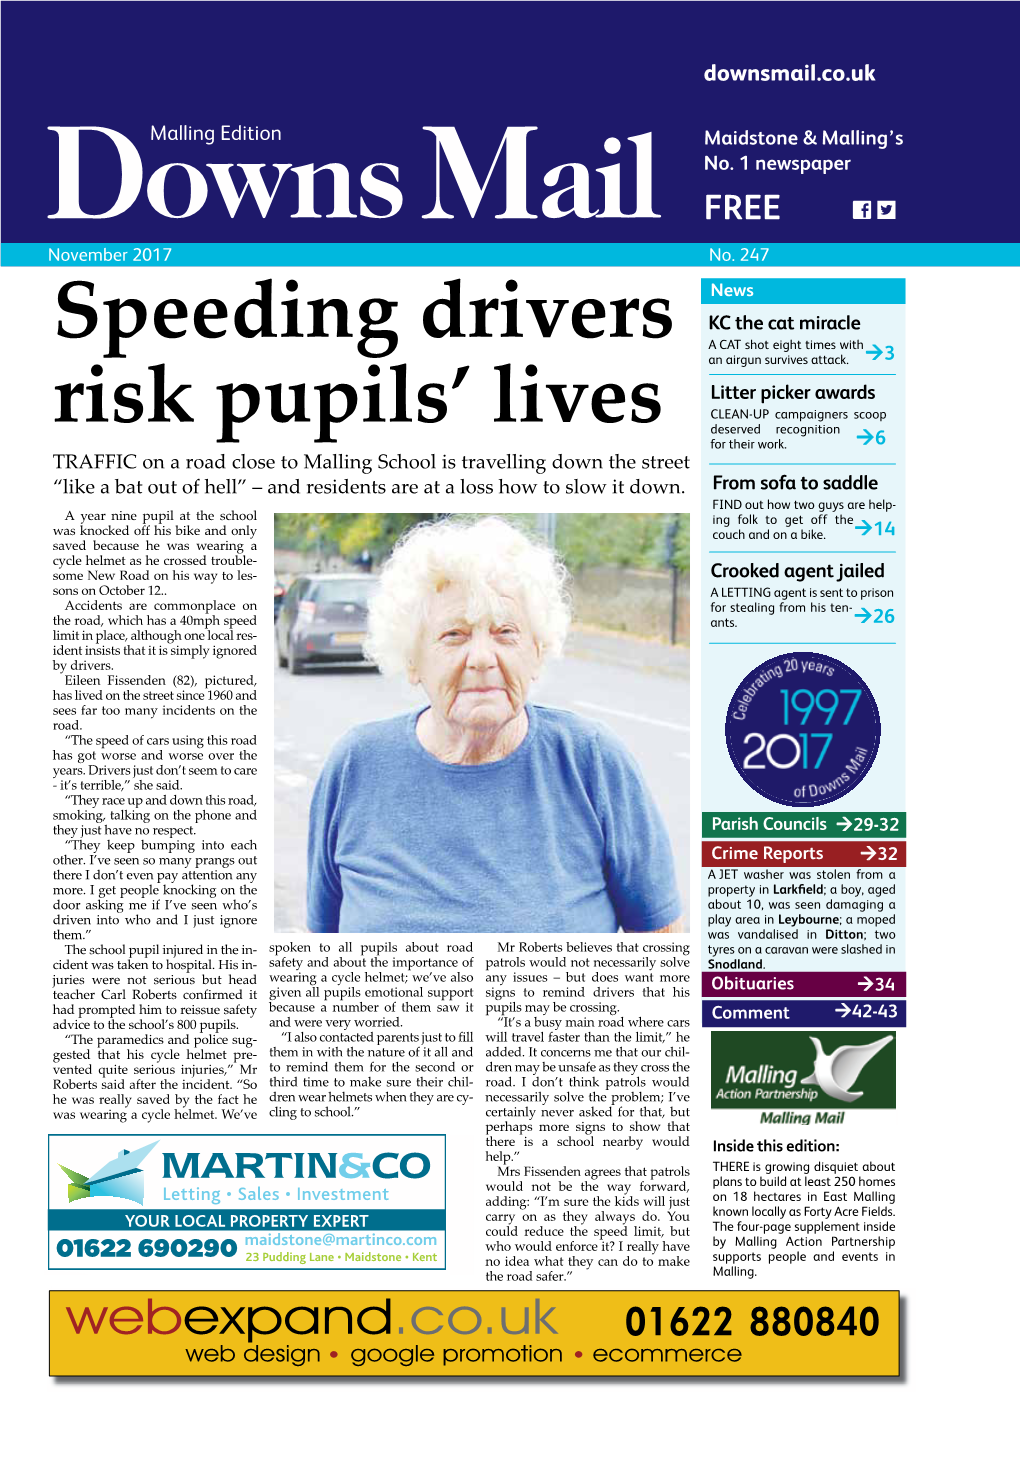 Speeding Drivers Risk Pupils' Lives